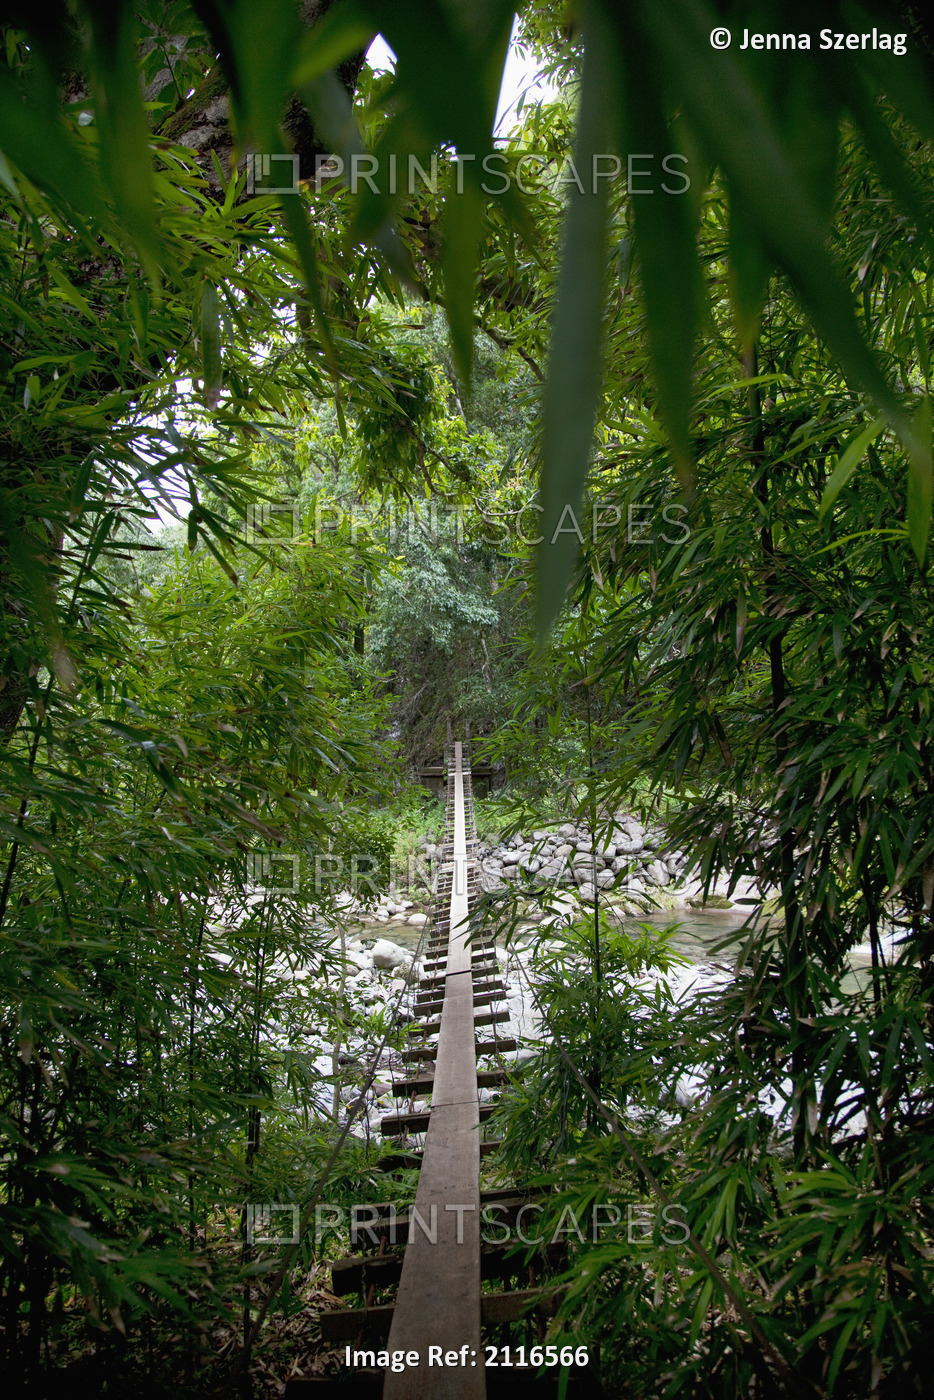 Hawaii, Maui, Waihee, A swinging Bridge into a lush green forest.